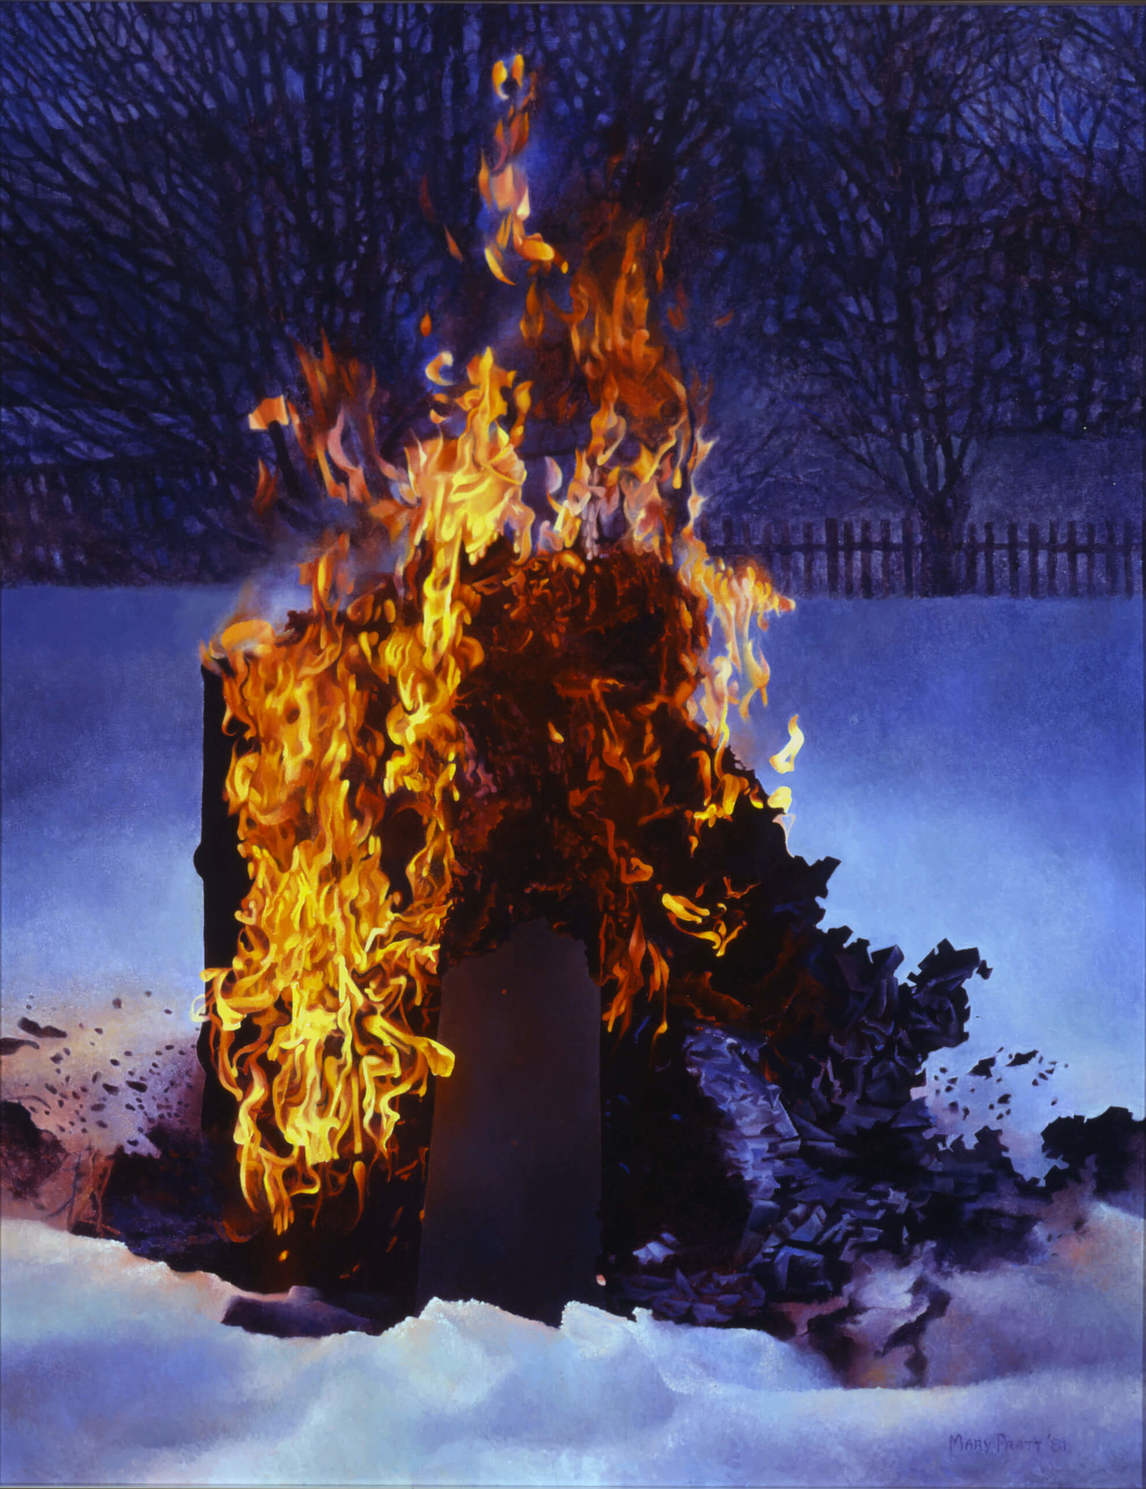 Mary Pratt, Christmas Fire, 1981